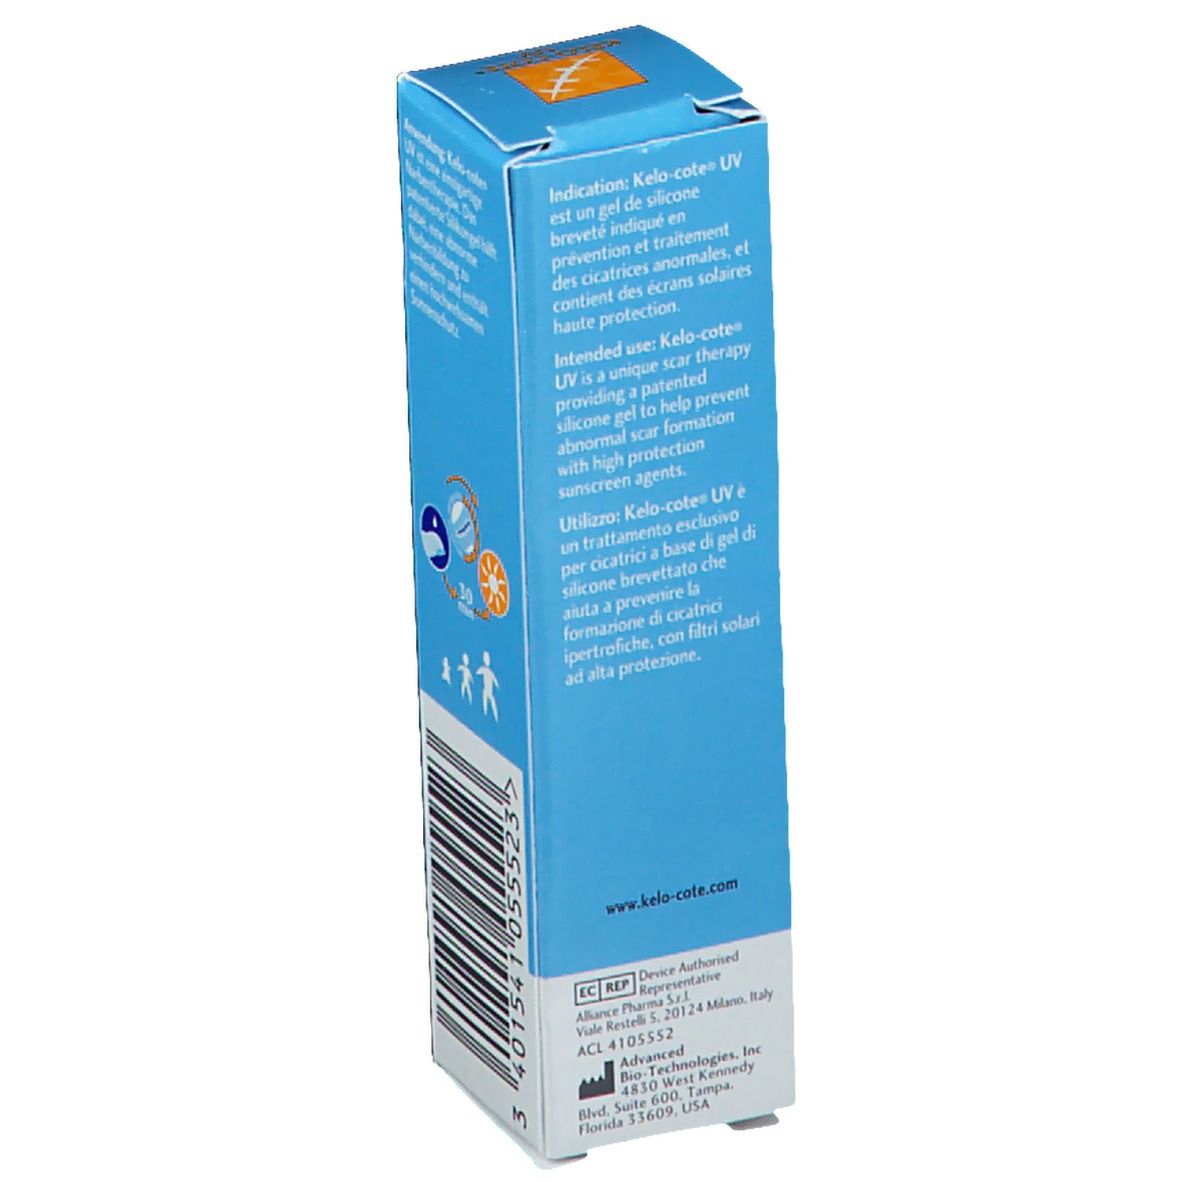 KELO-cote® UV Silikon Narbengel LSF 30